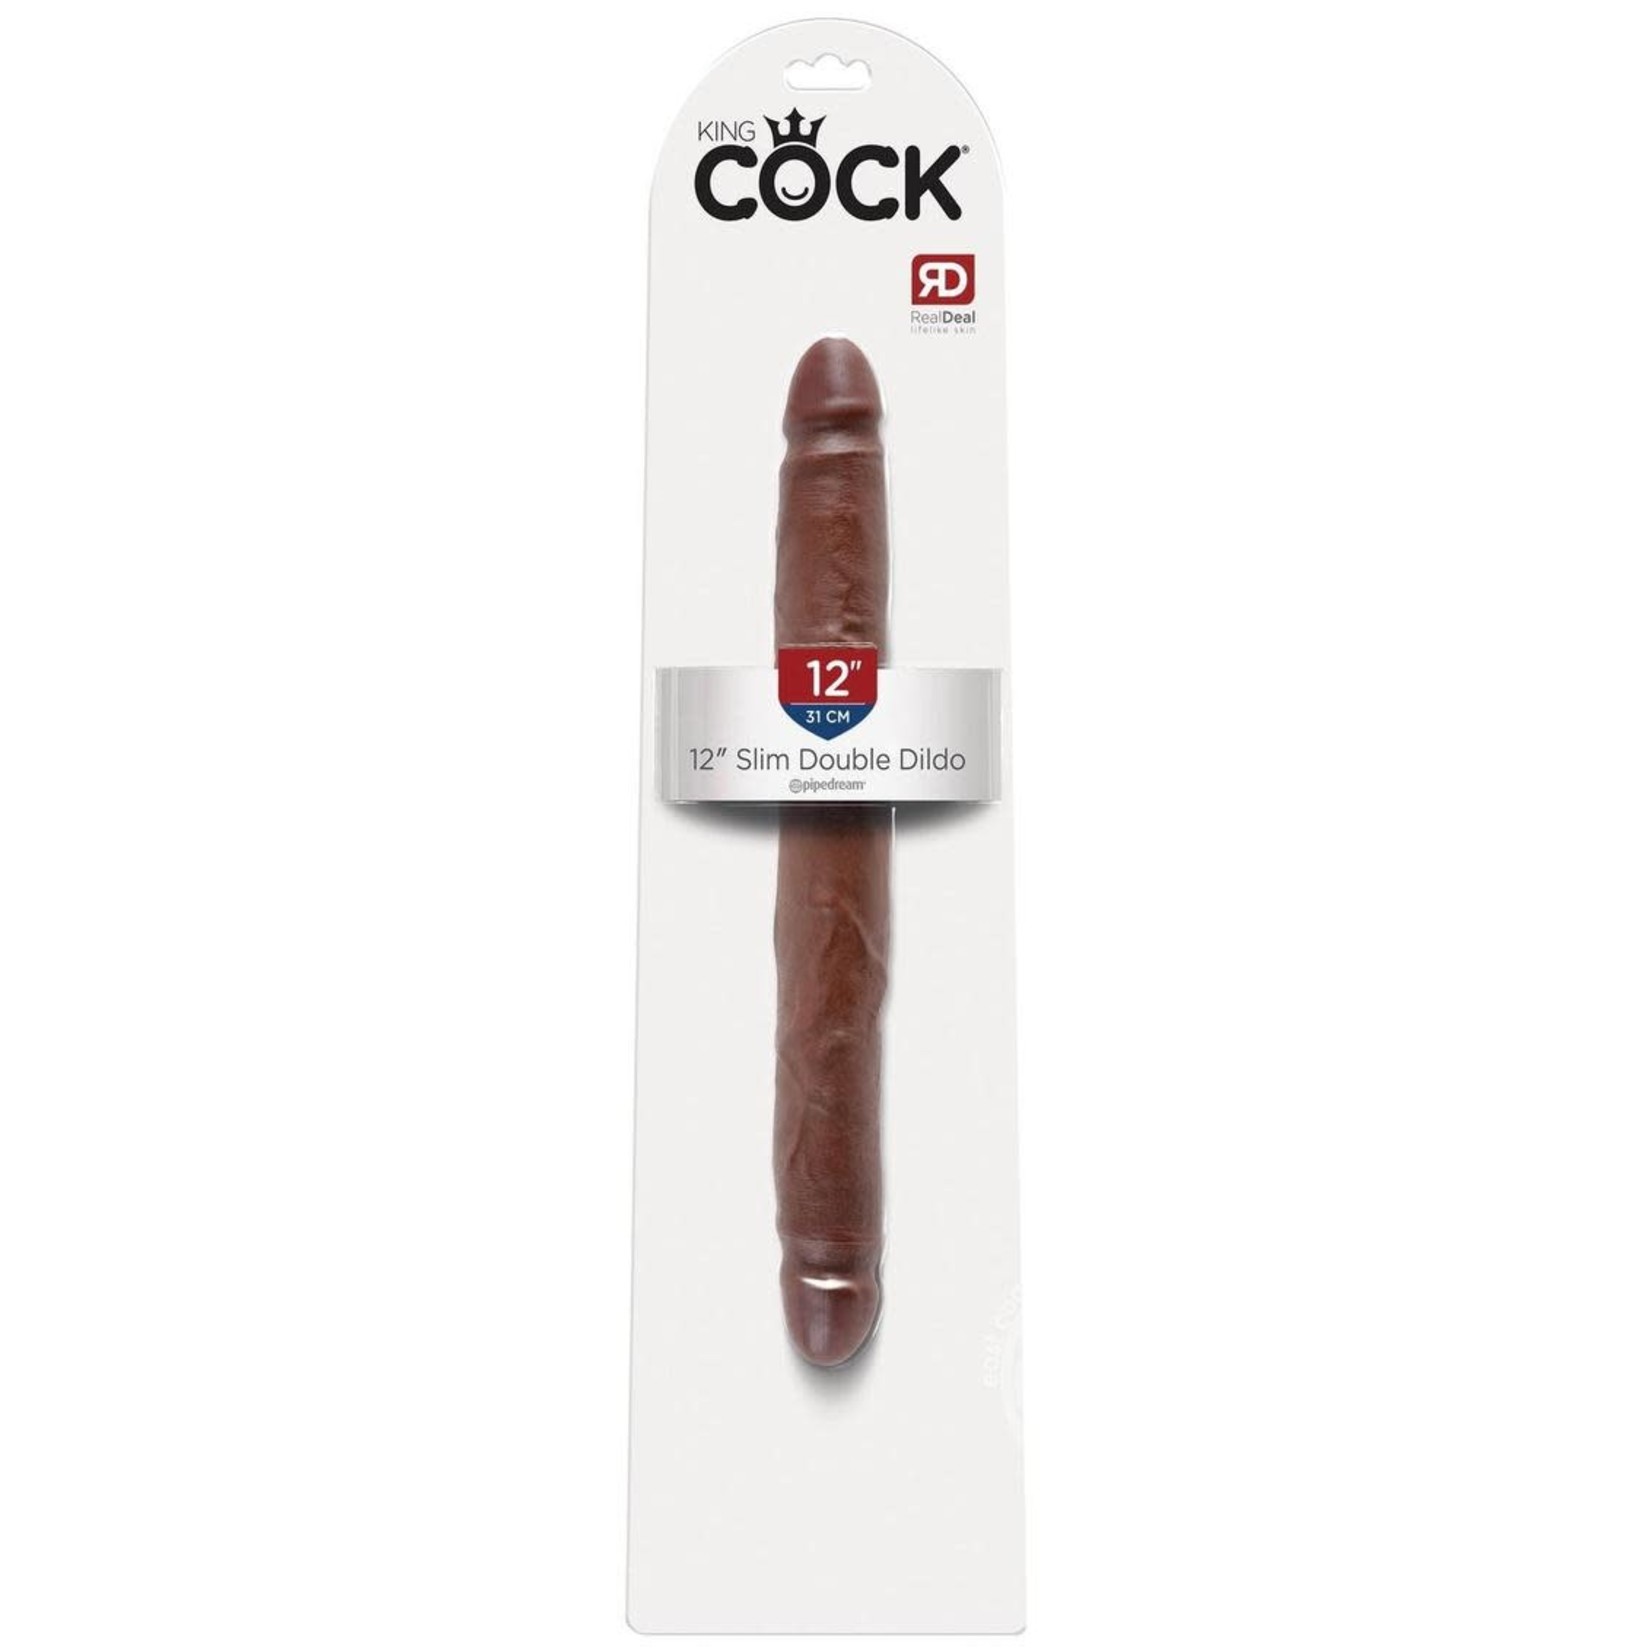 King Cock Slim Double Dildo 12in - Chocolate